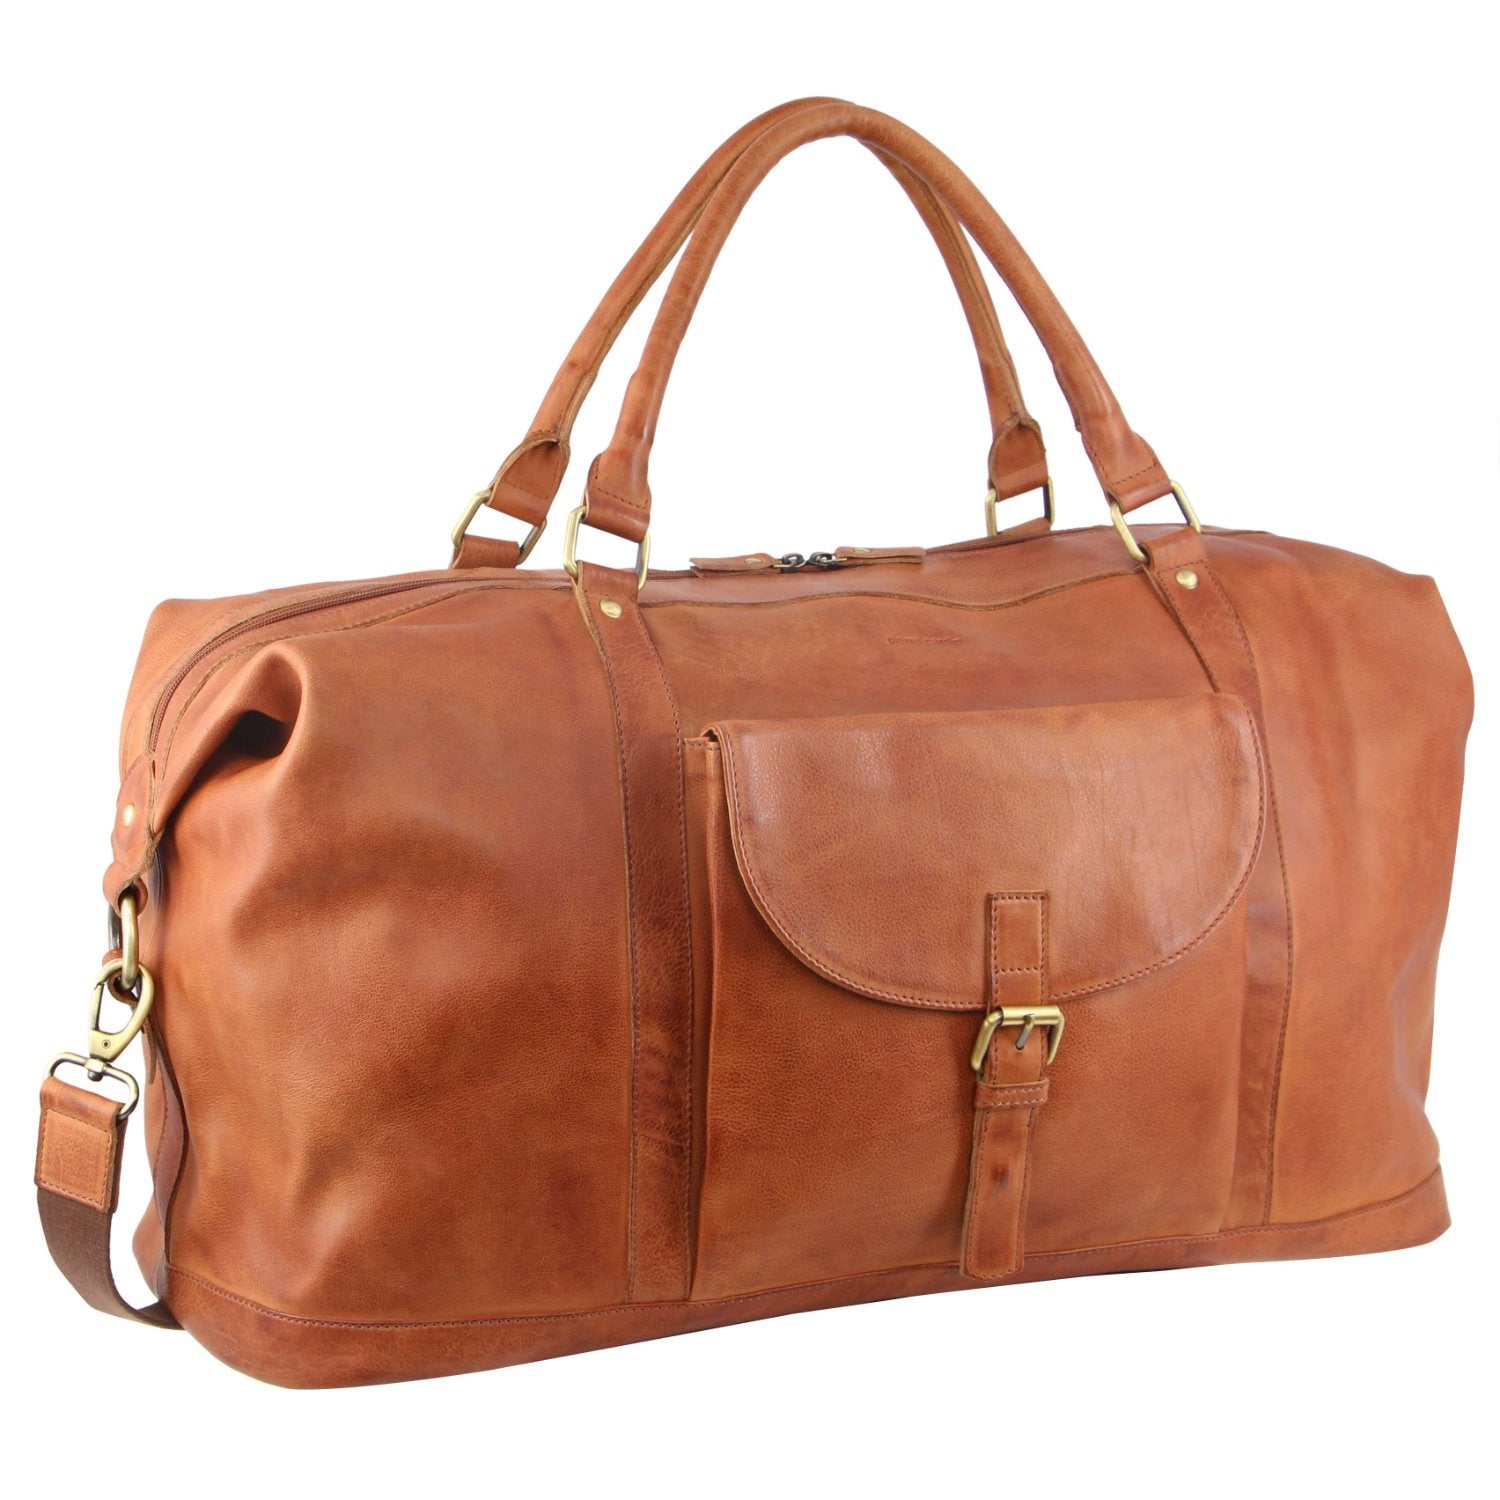 Pierre Cardin Rustic Leather Business/Overnight Bag in Cognac